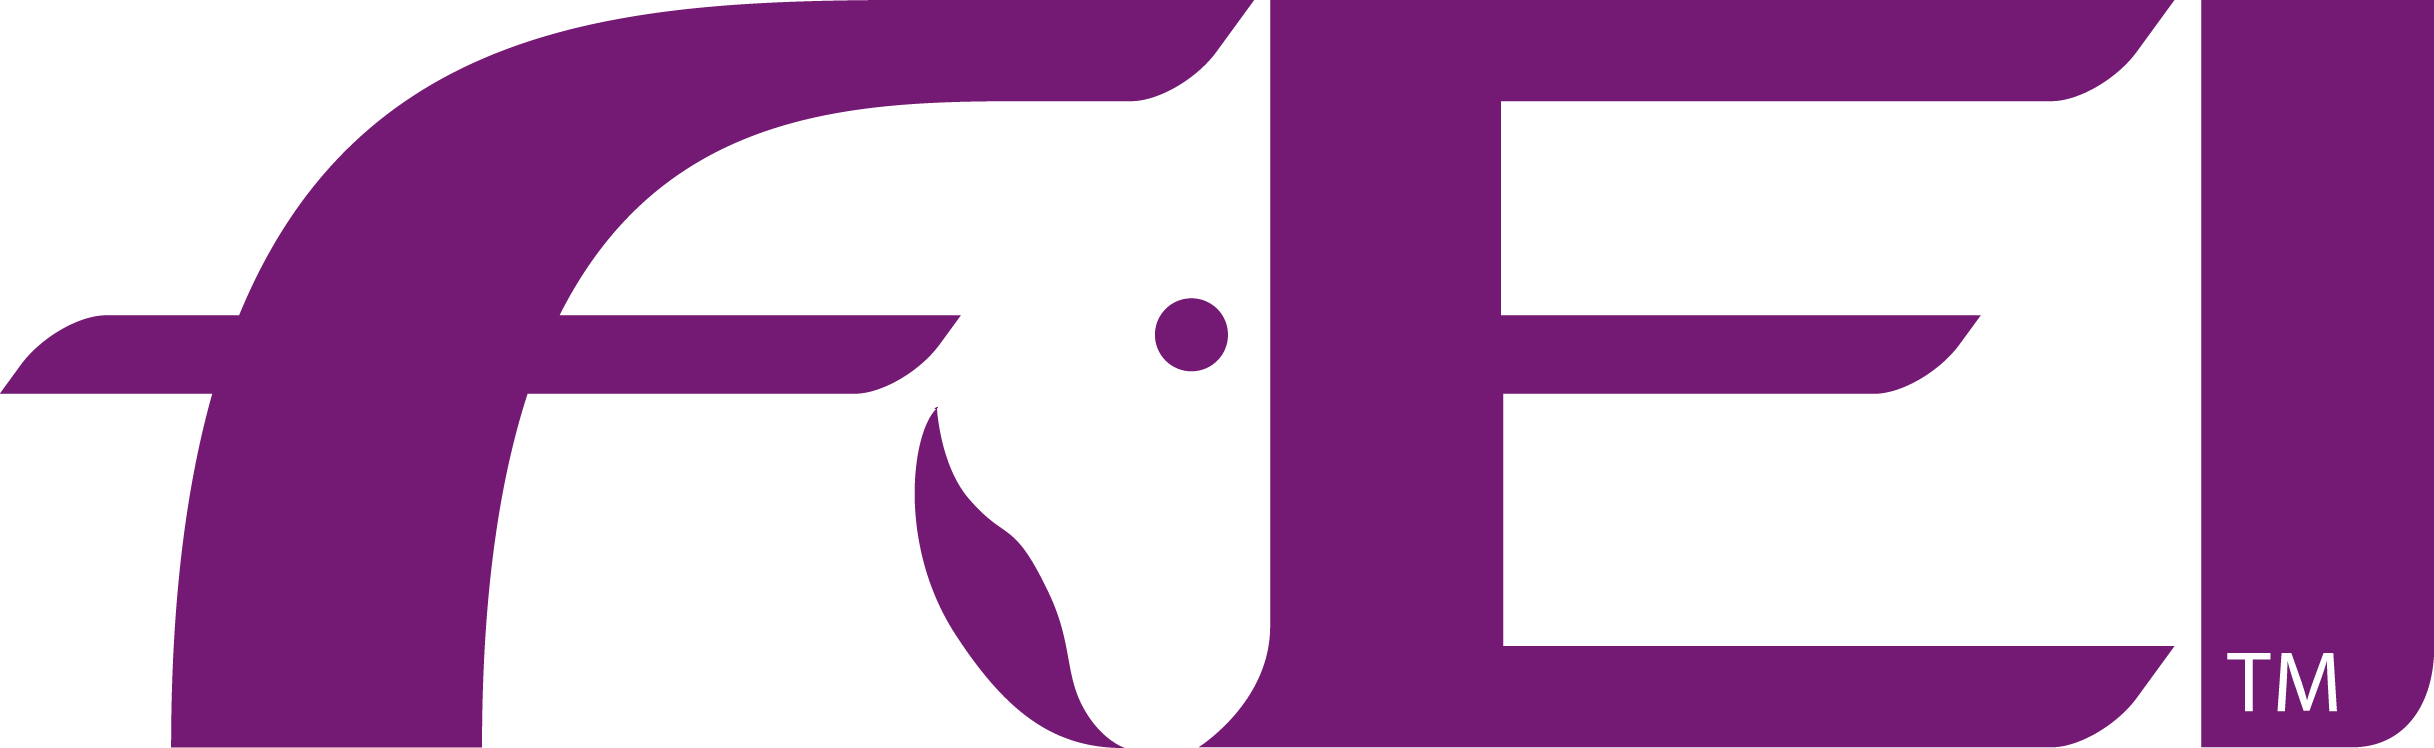 Fédération Équestre Internationale (FEI) Logo [fei.org]